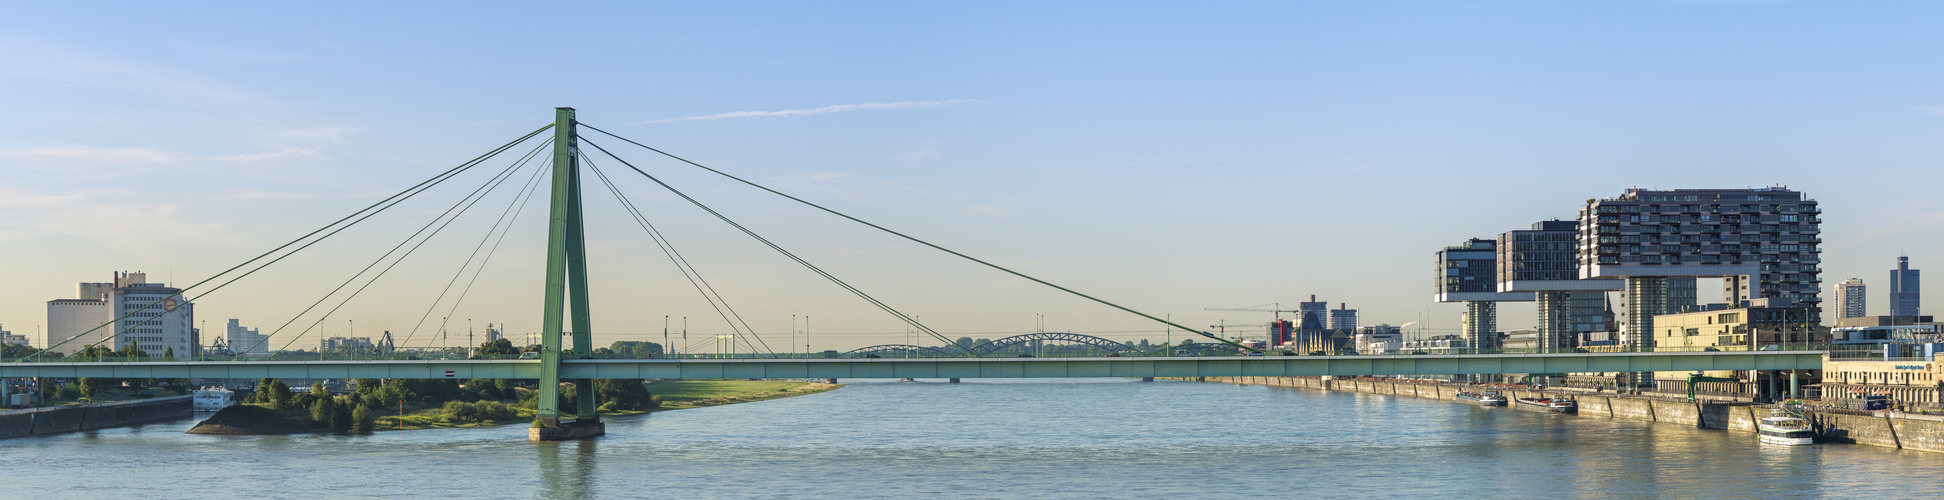 Kranhäuser und Severinsbrücke in Köln